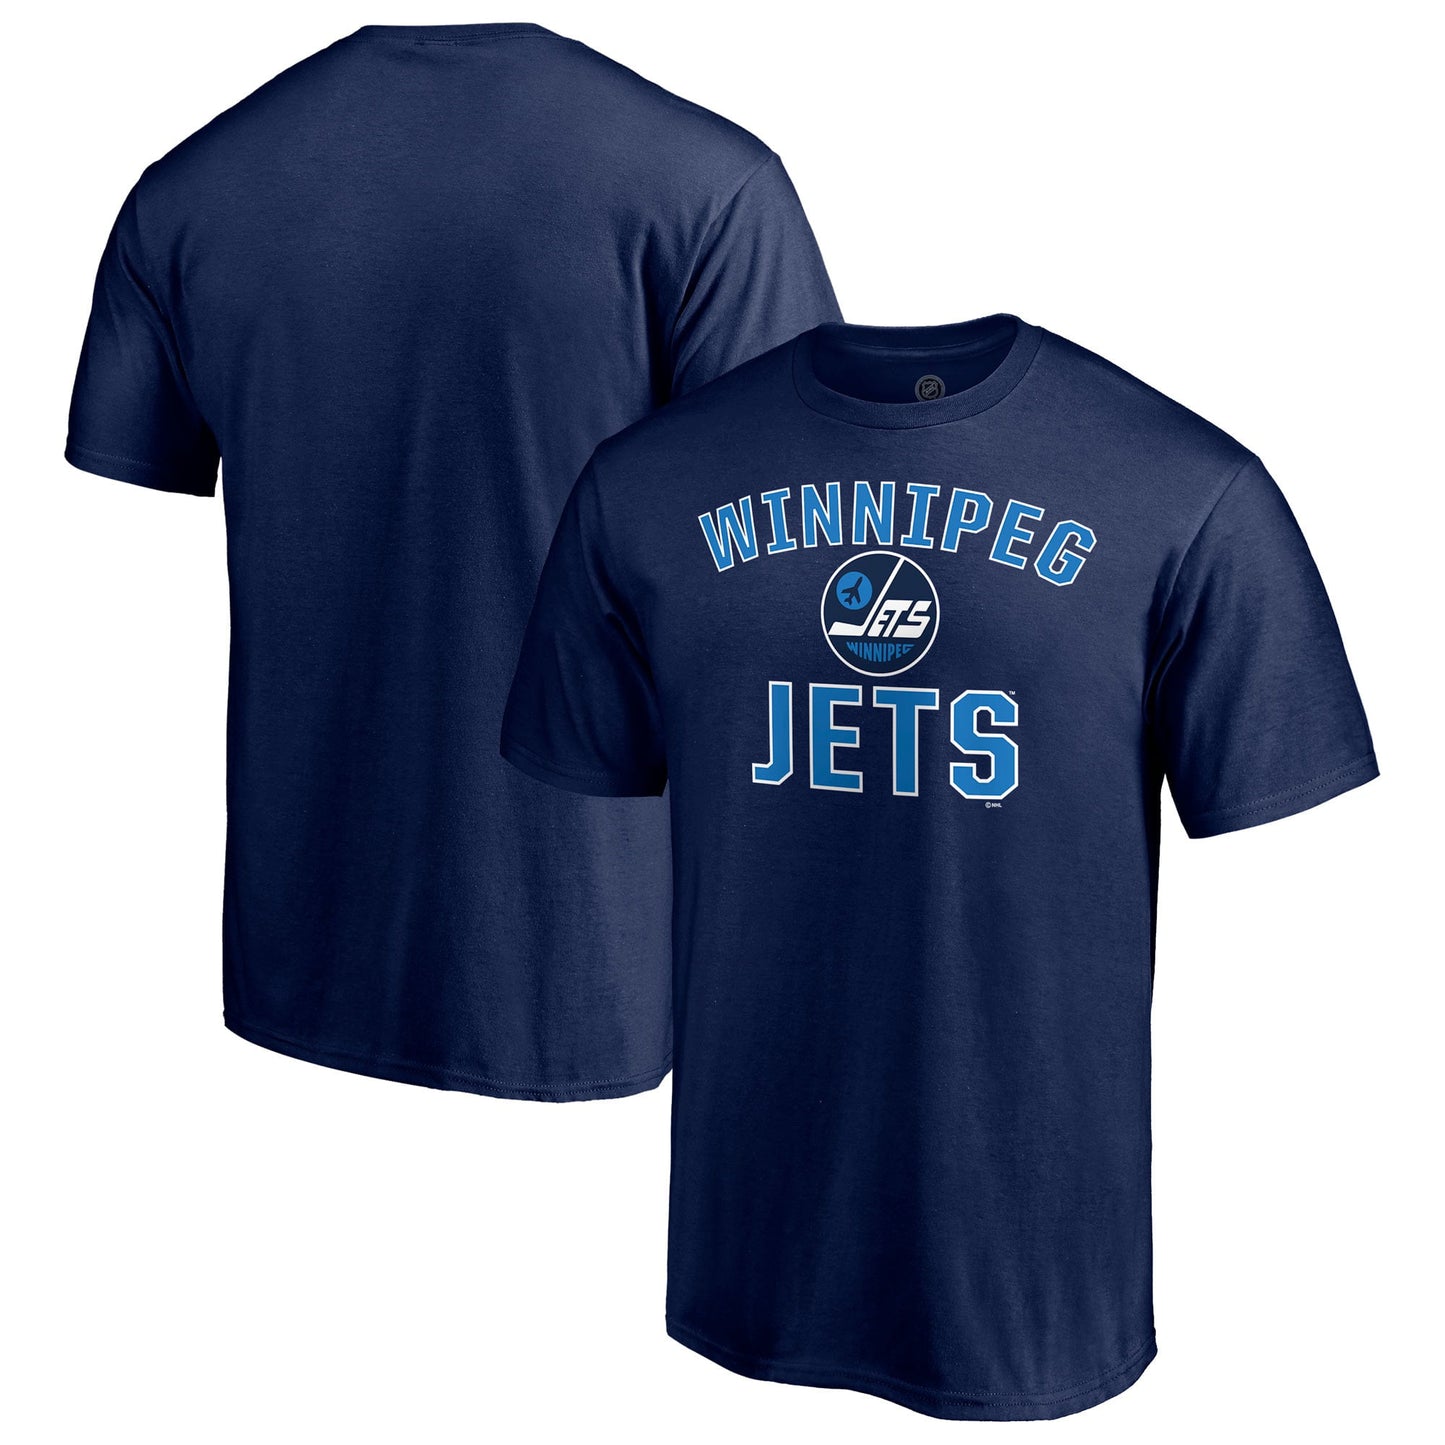 Men's Fanatics Branded Navy Winnipeg Jets Special Edition Victory Arch T-Shirt